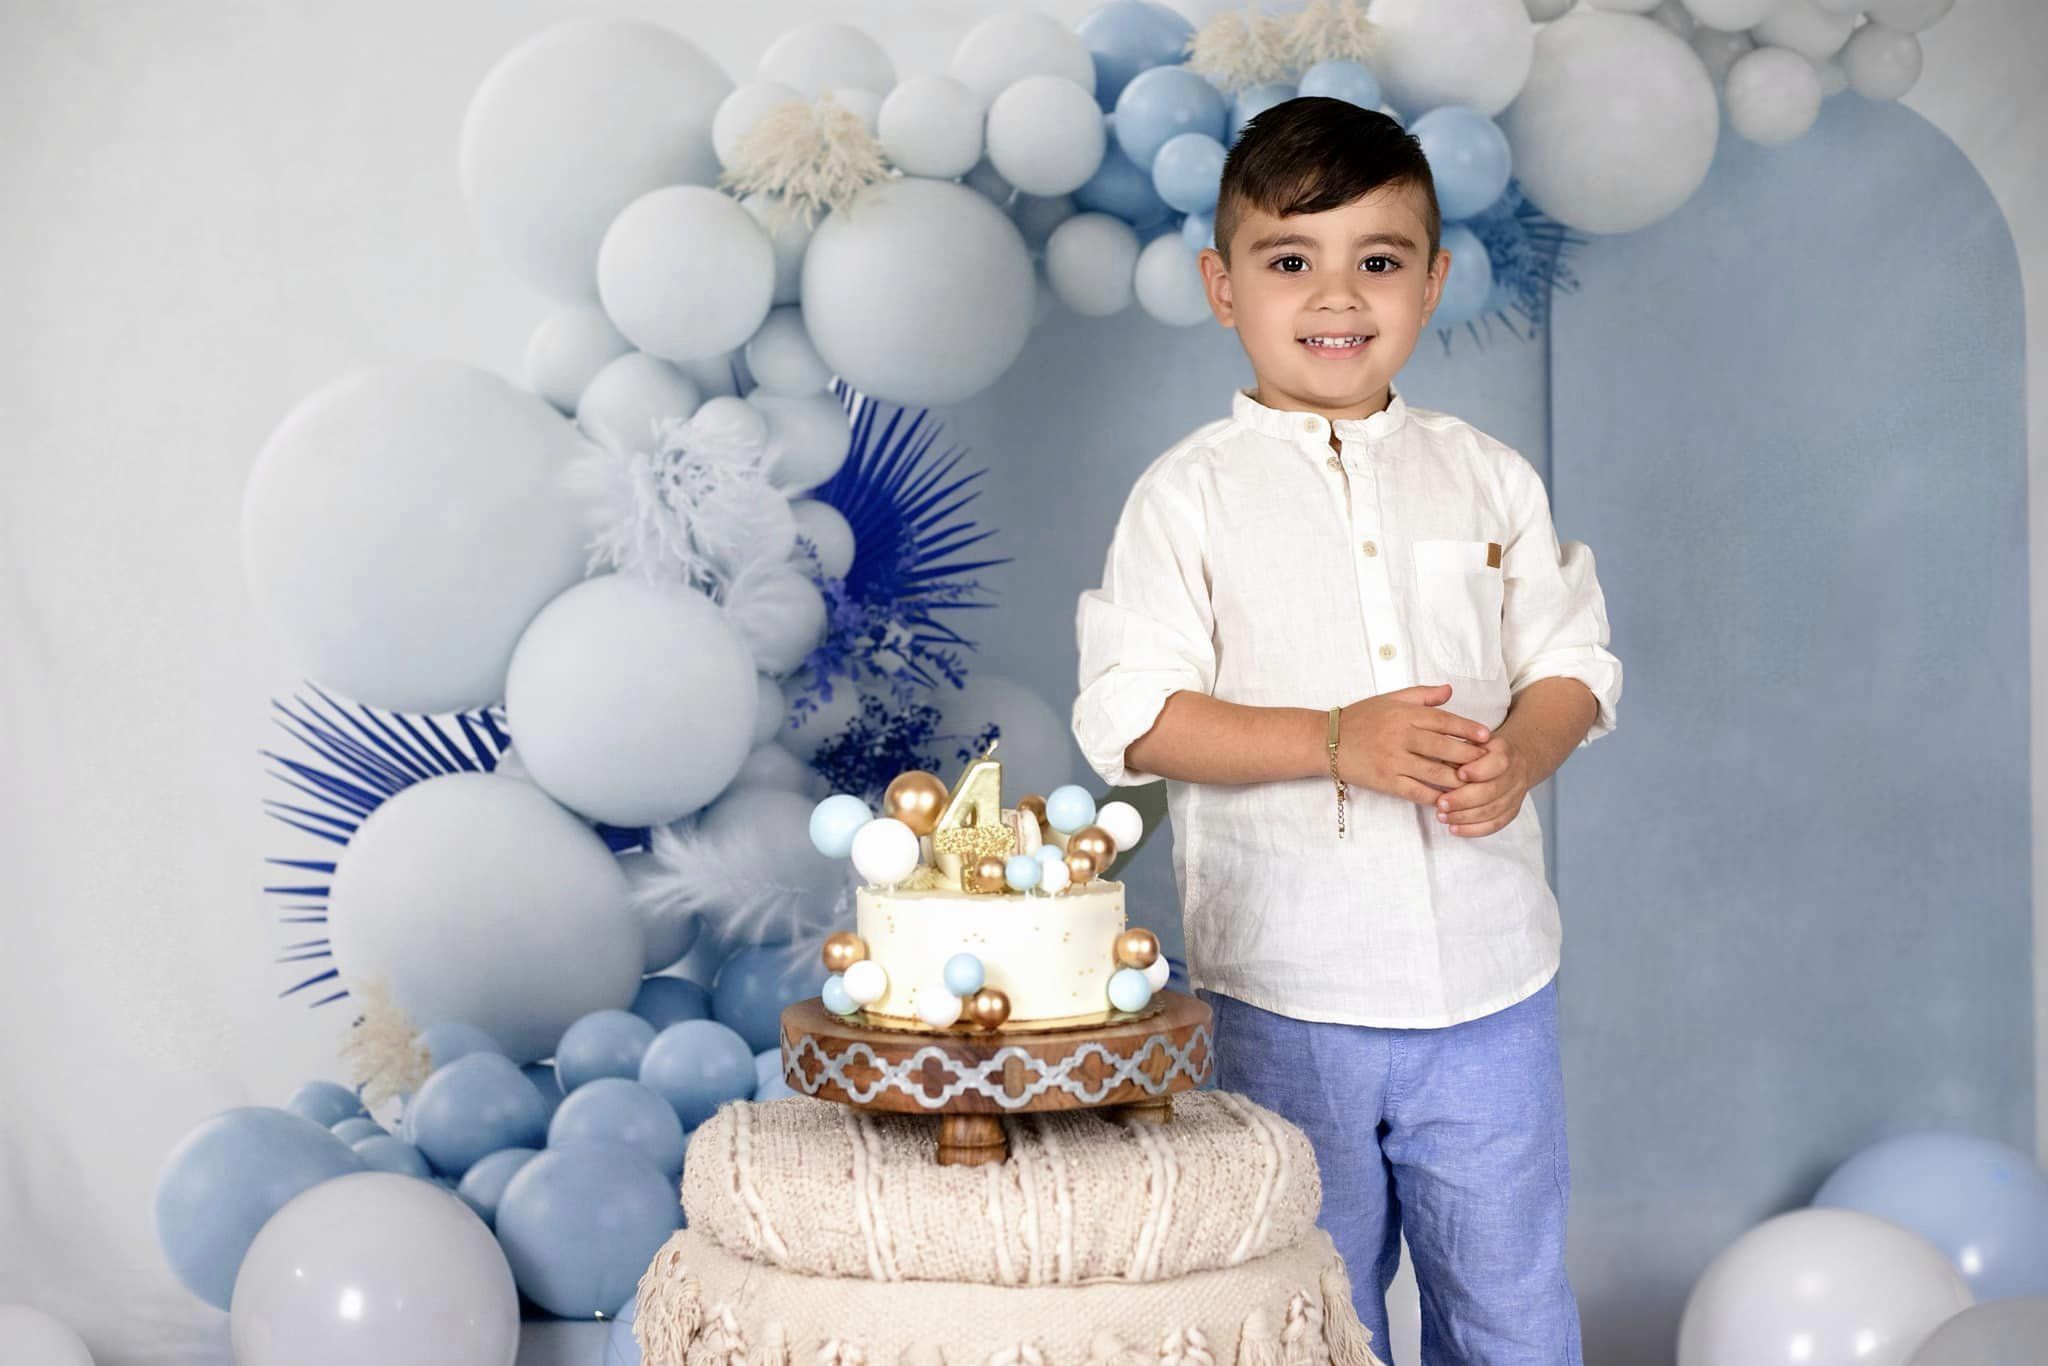 Kate Boho Luftballons Hintergrund Blau Cake Smash Party von Uta Mueller Photography